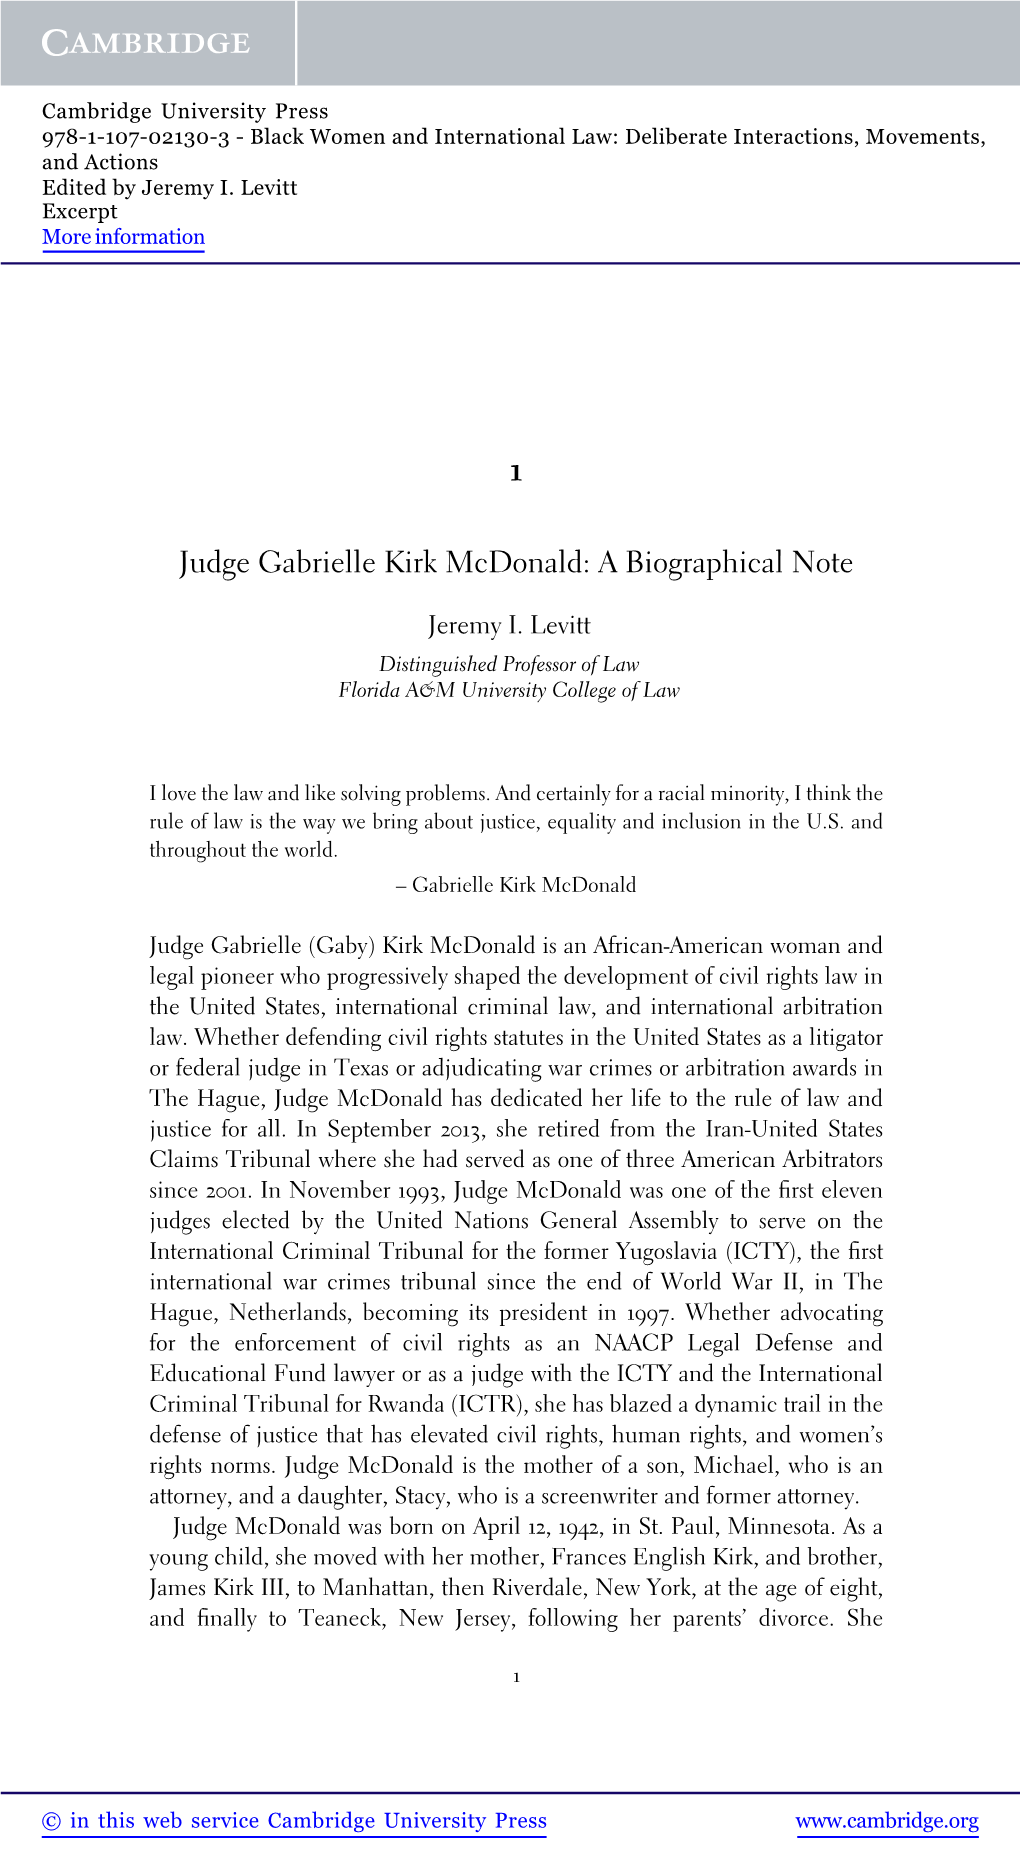 Judge Gabrielle Kirk Mcdonald: a Biographical Note